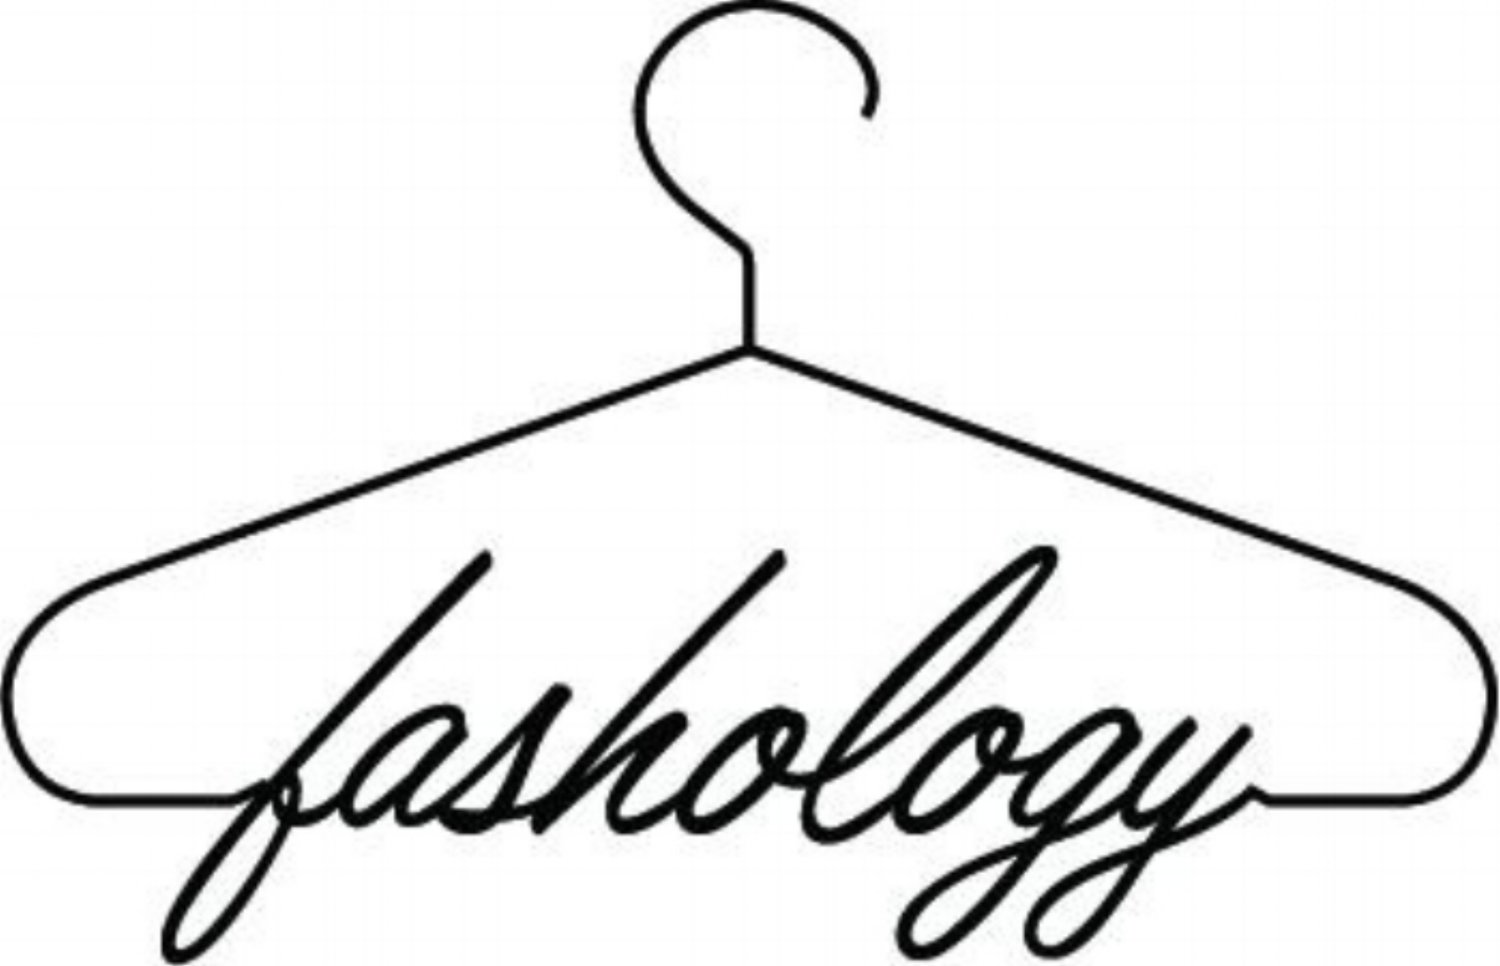 Fashology